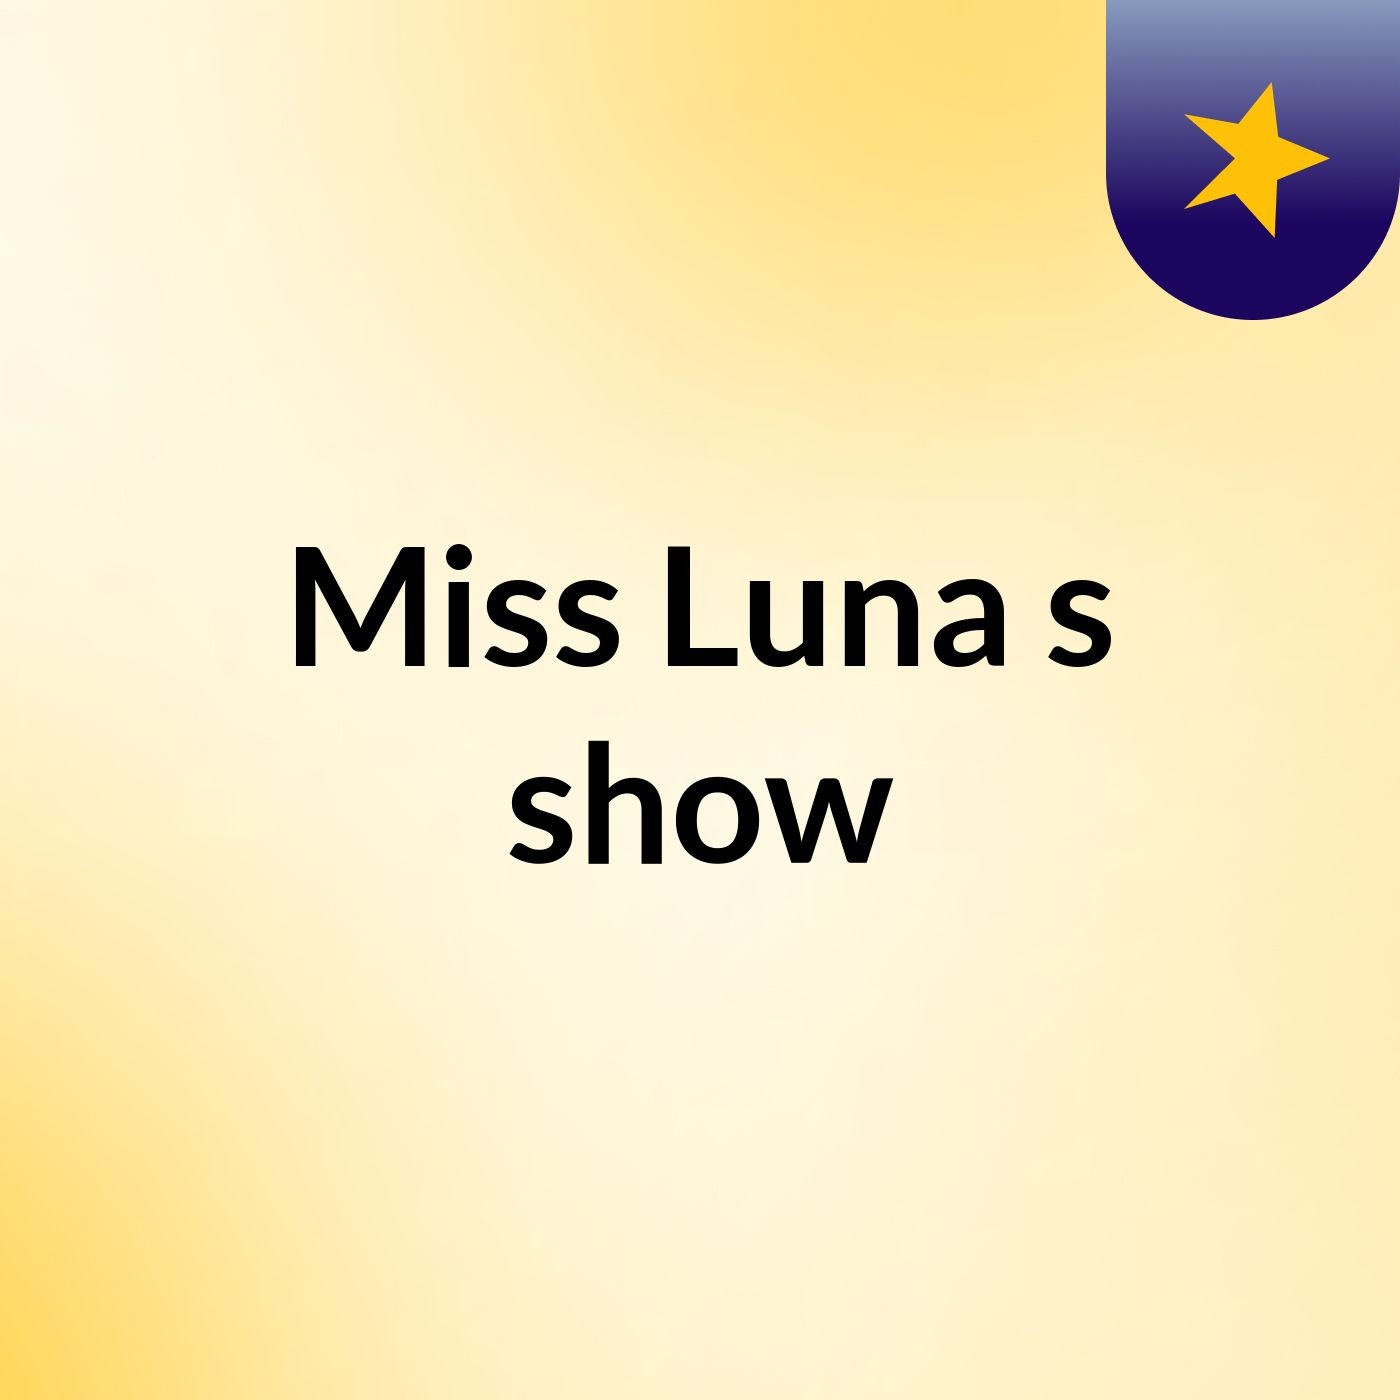 Miss Luna's show